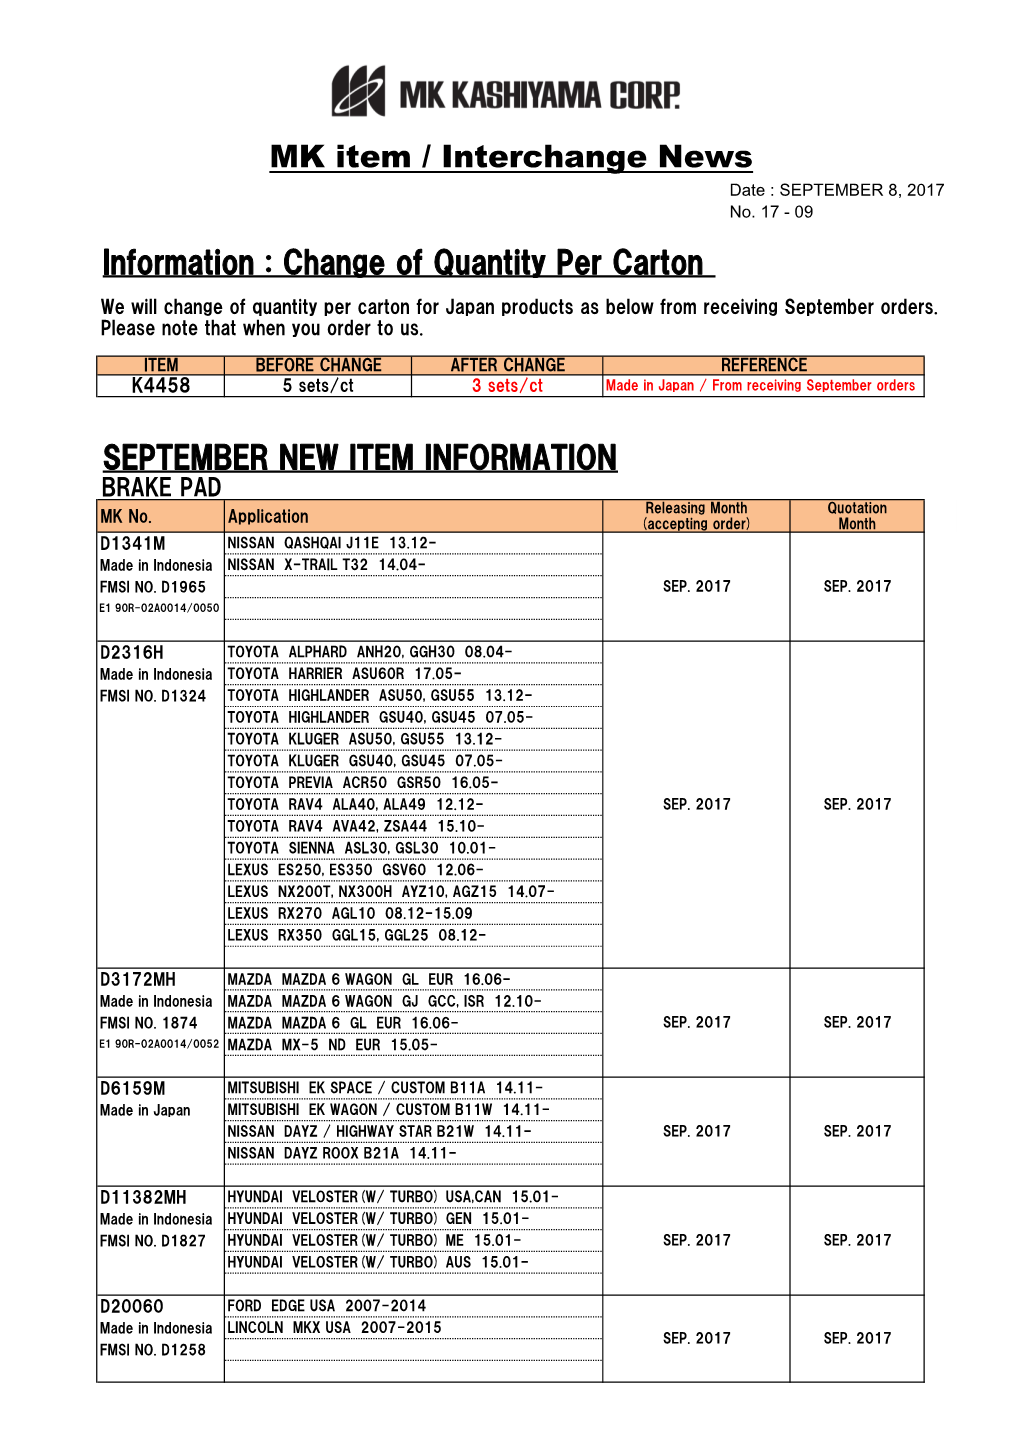 Information : Change of Quantity Per Carton SEPTEMBER NEW ITEM